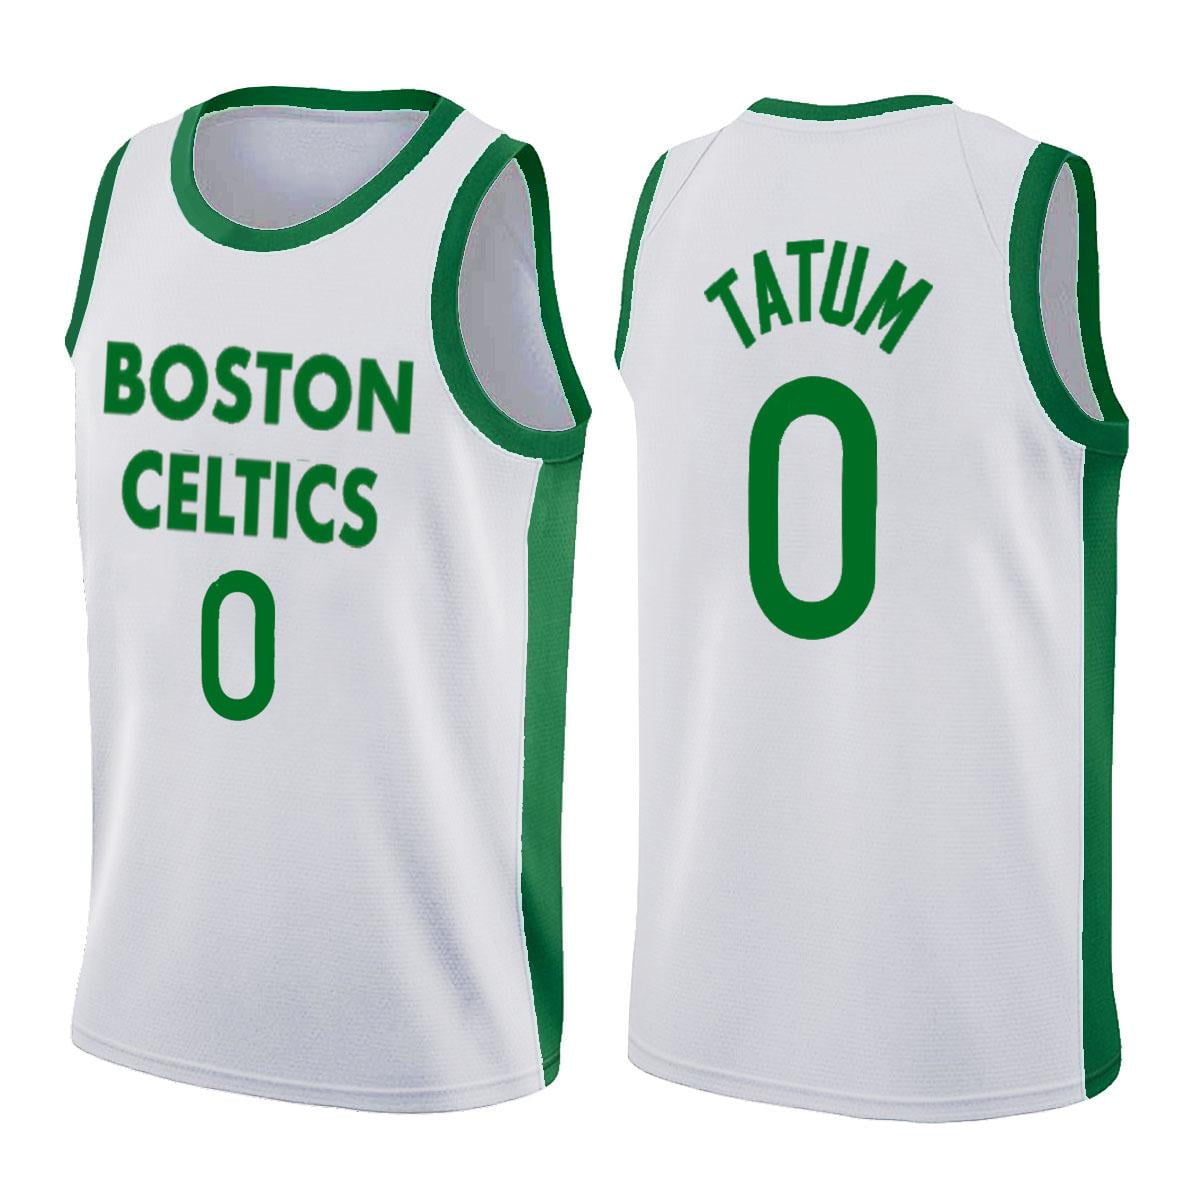 Boston Celtics Men NBA Jerseys for sale